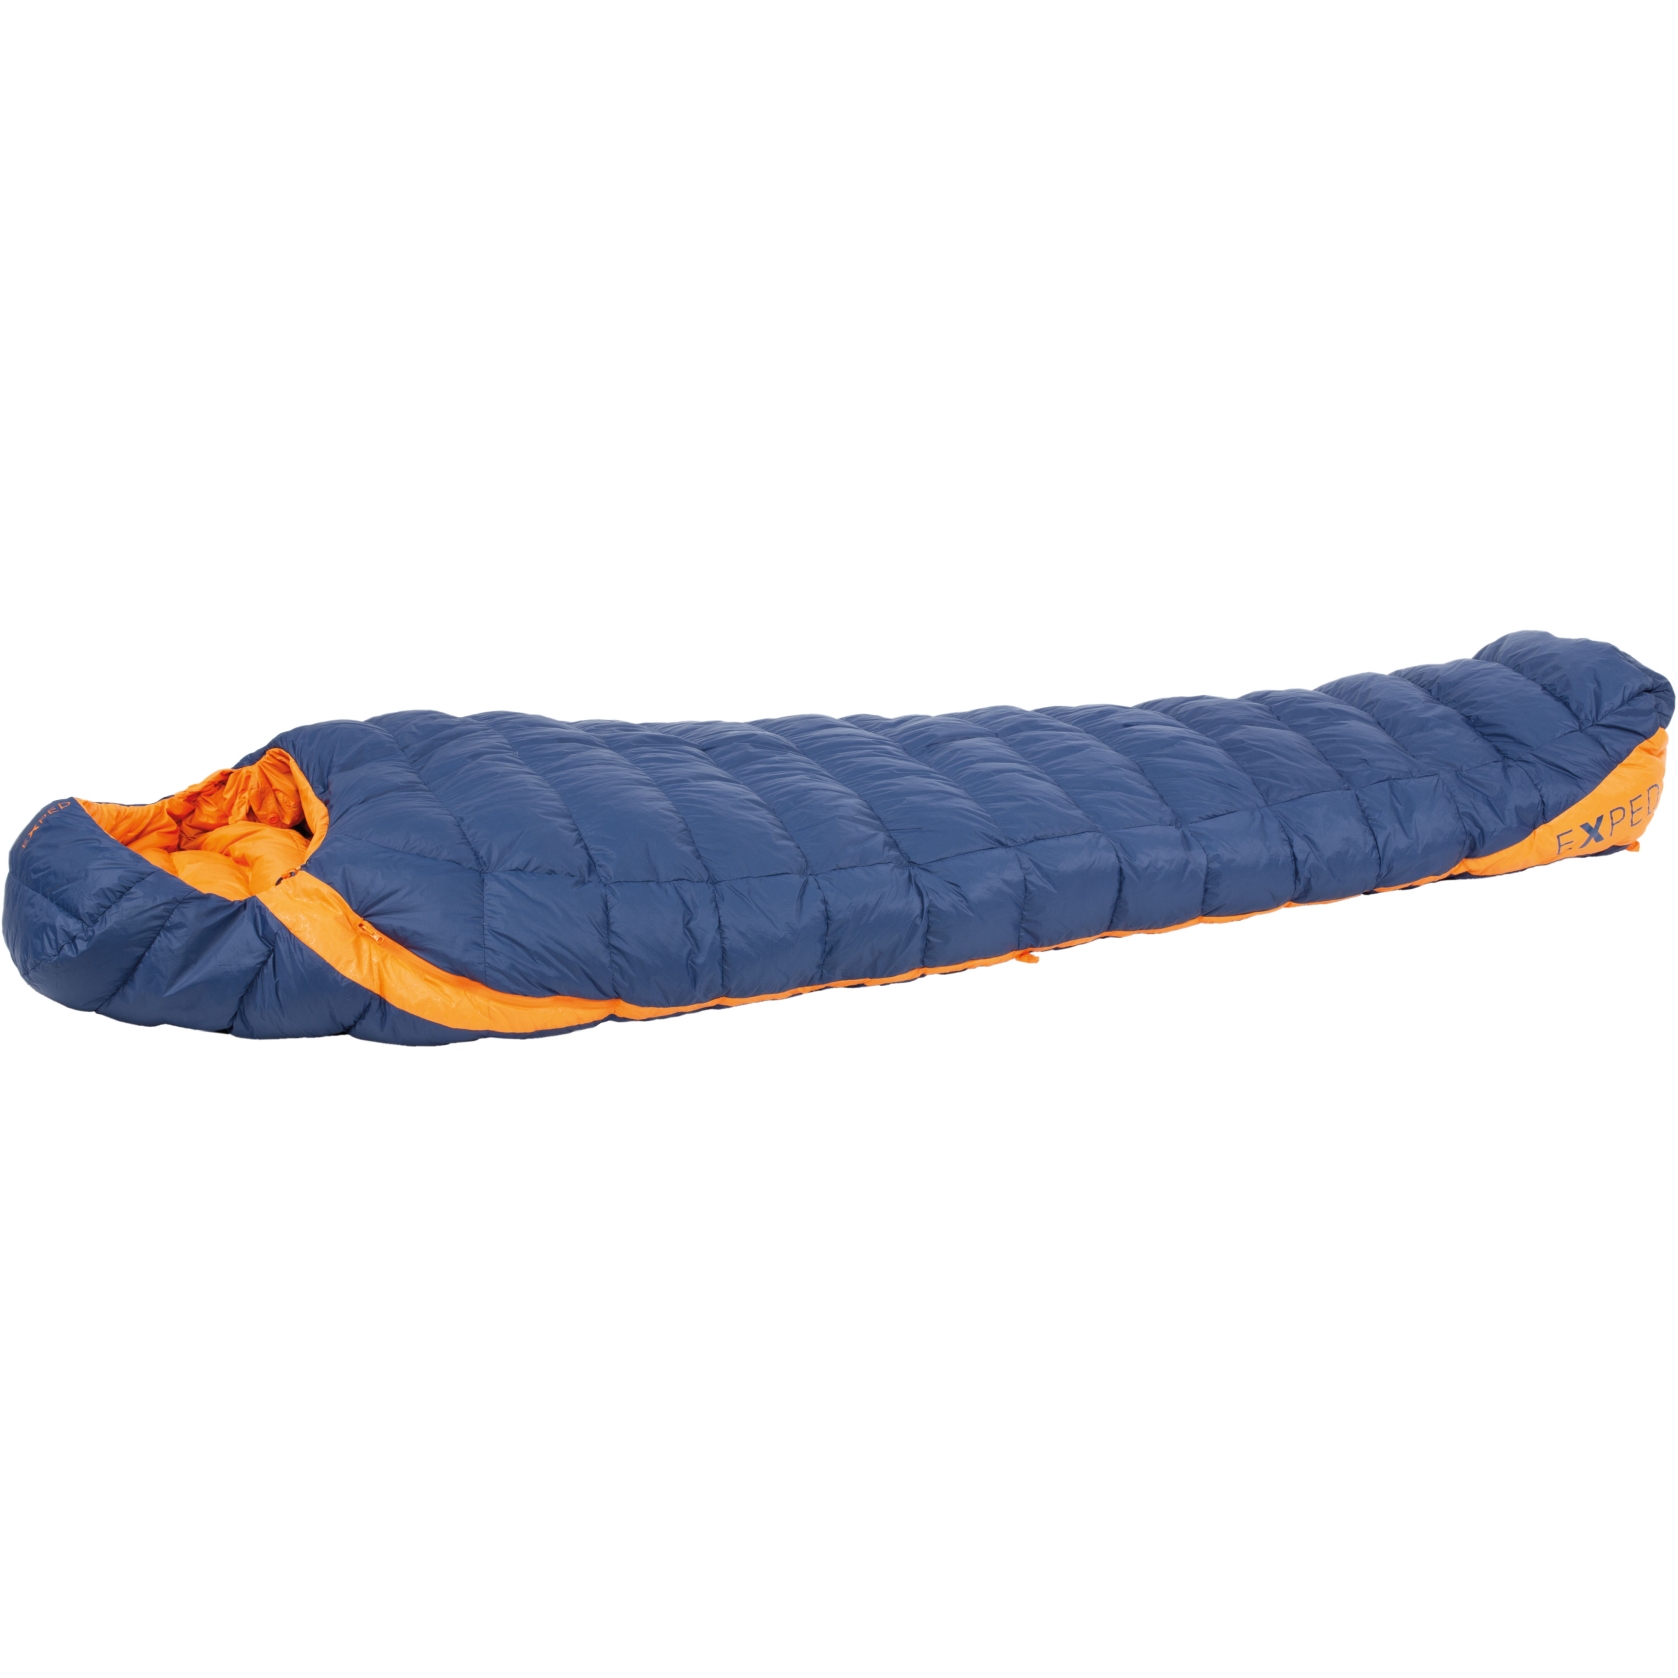 Productfoto van Exped Comfort 0° Sleeping Bag - M - blue/orange